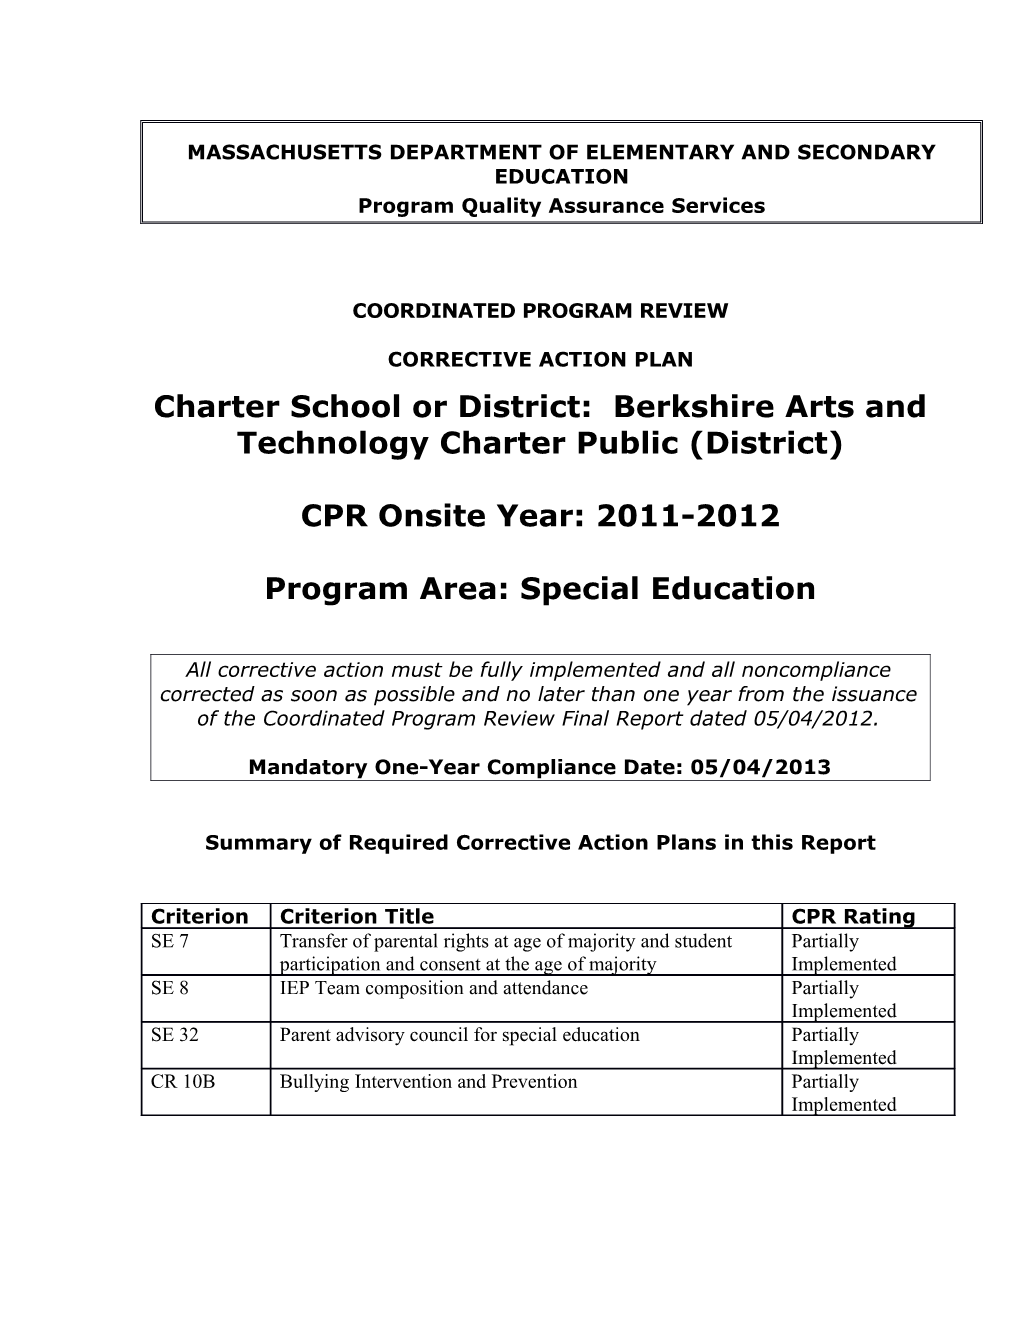 Berkshire Arts and Technology Charter School CAP 2012